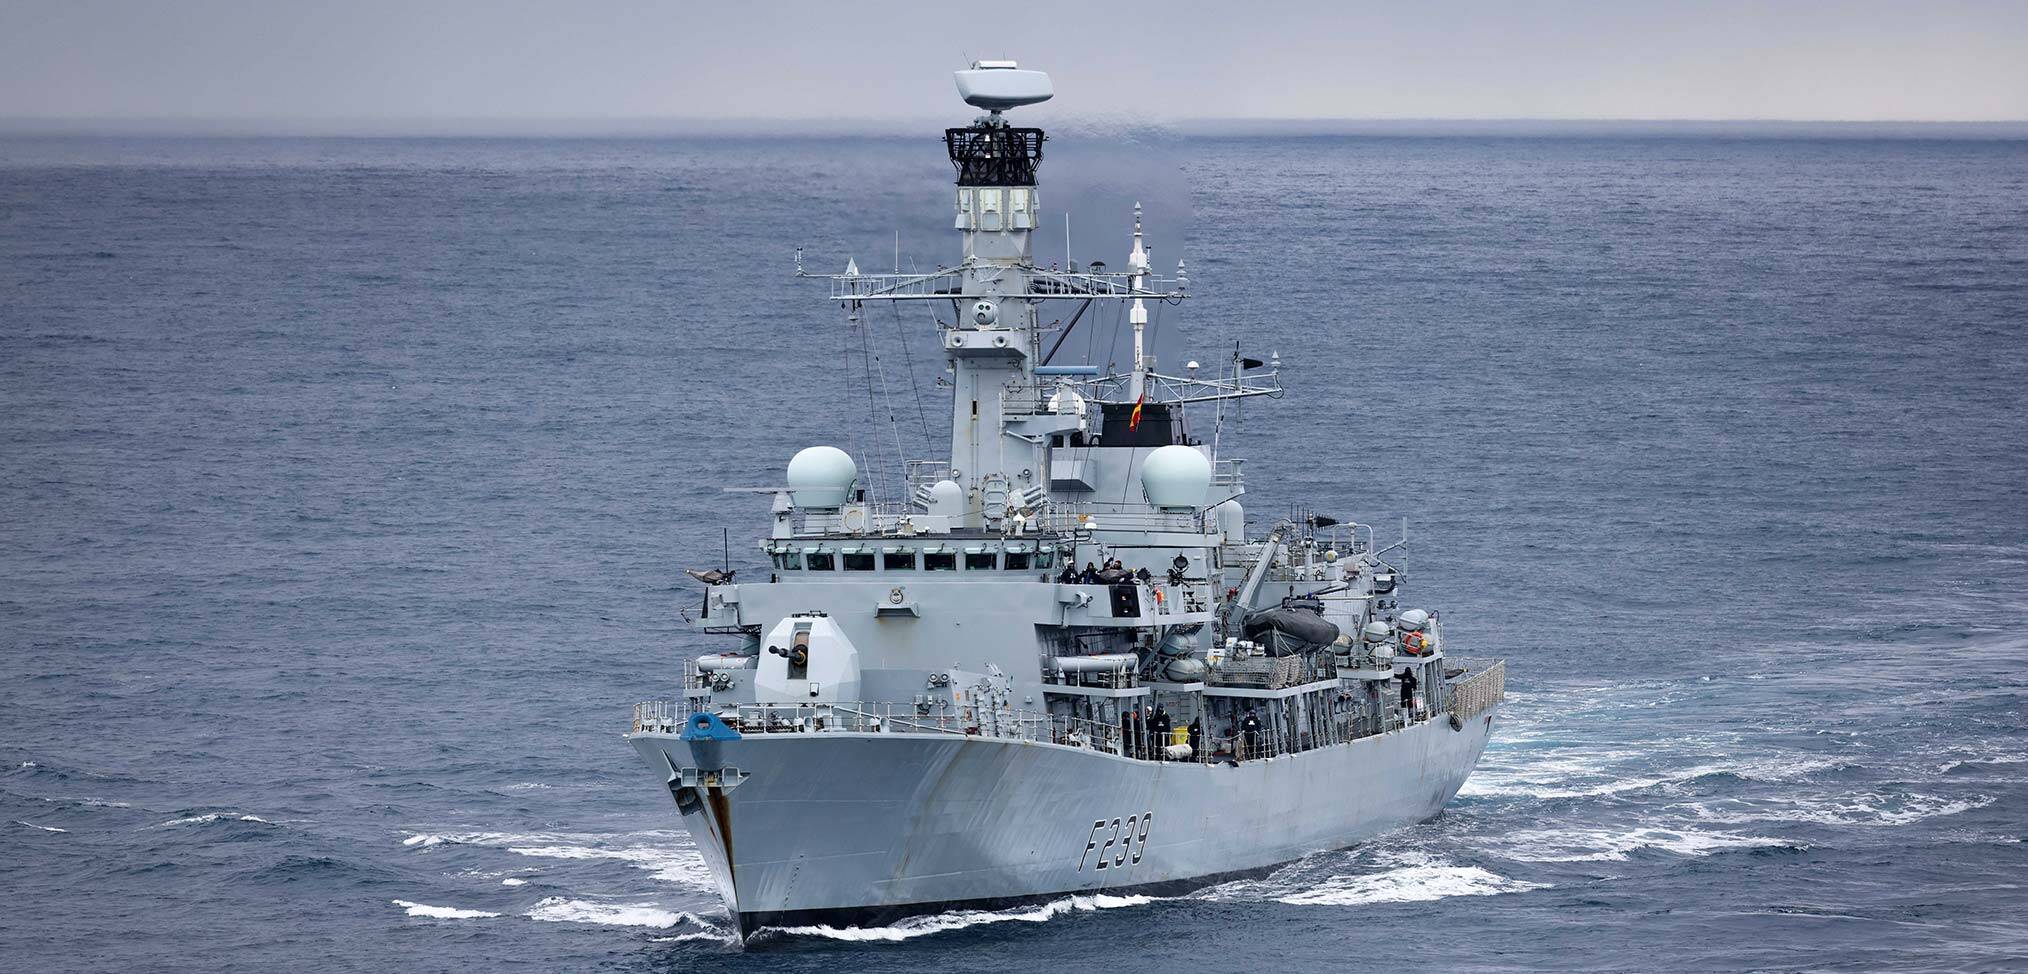 Analysis: Royal Navy deploys seven ships on underwater infrastructure patrols